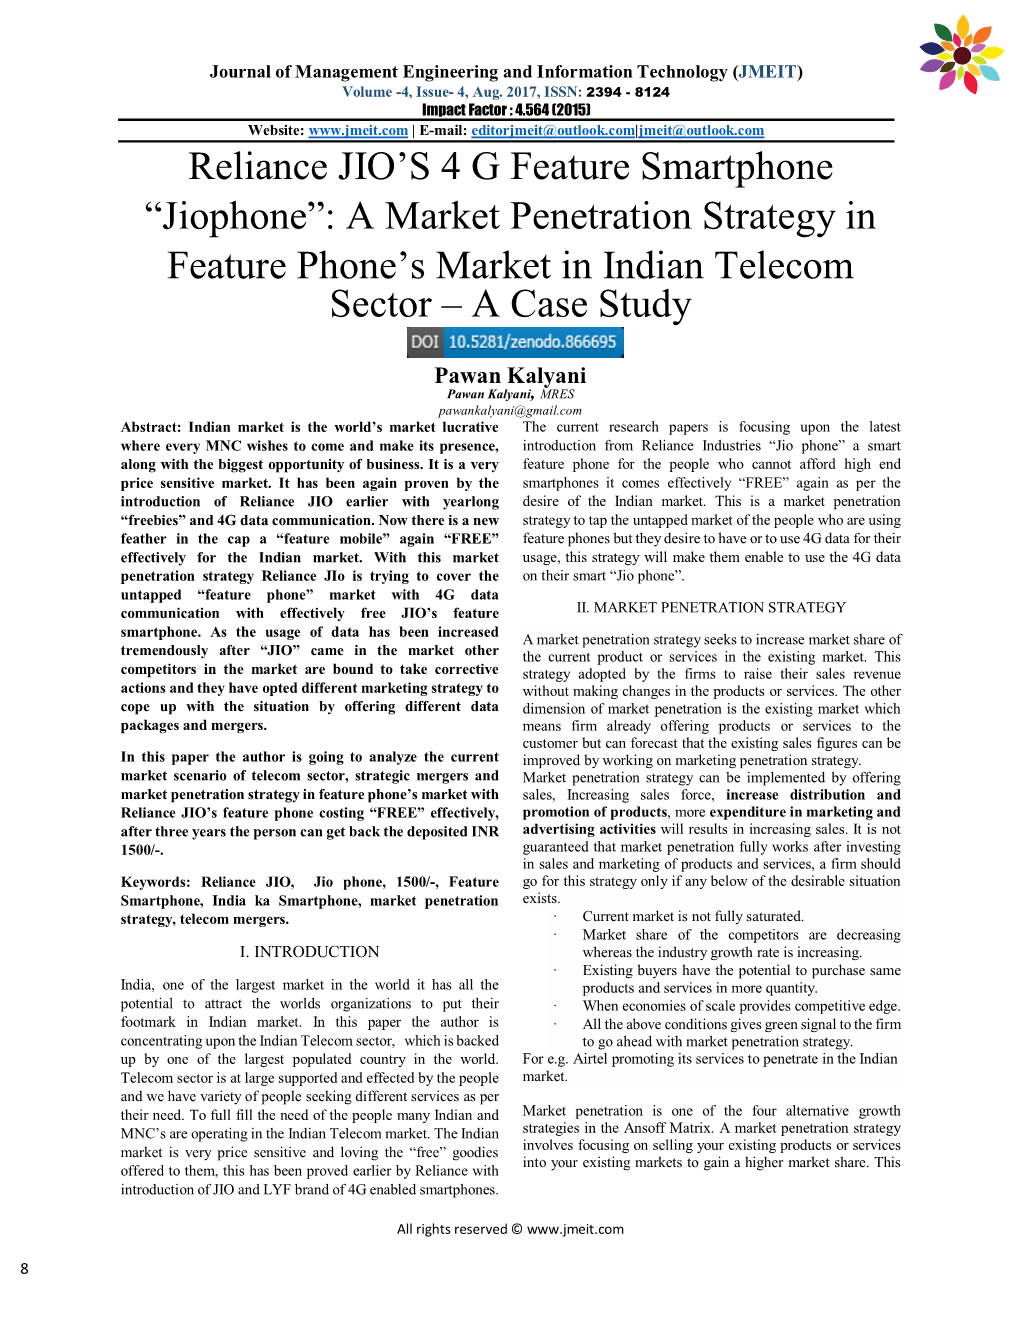 Reliance JIO's 4 G Feature Smartphone “Jiophone”